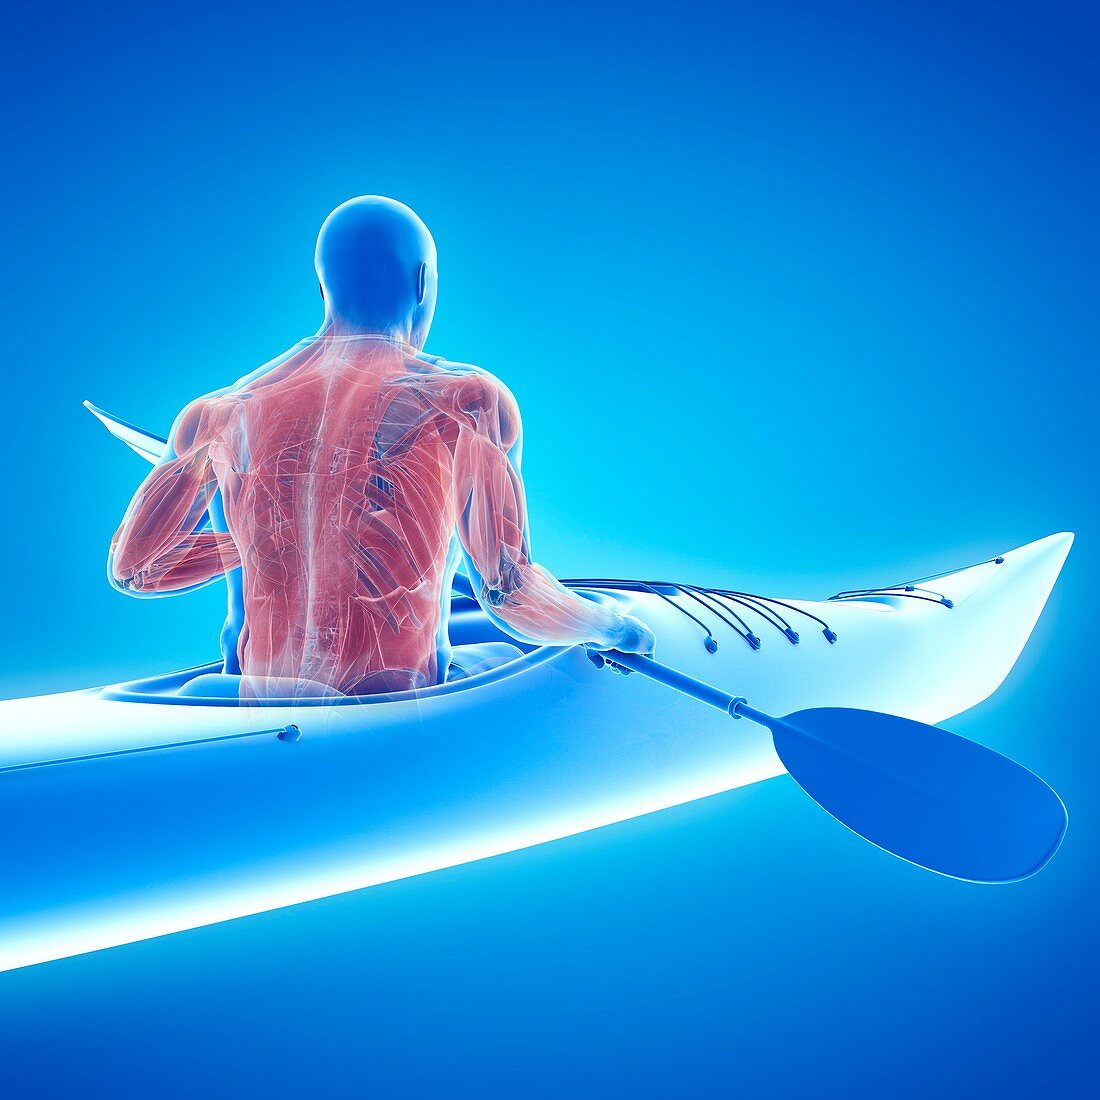 Canoeist's muscles, illustration